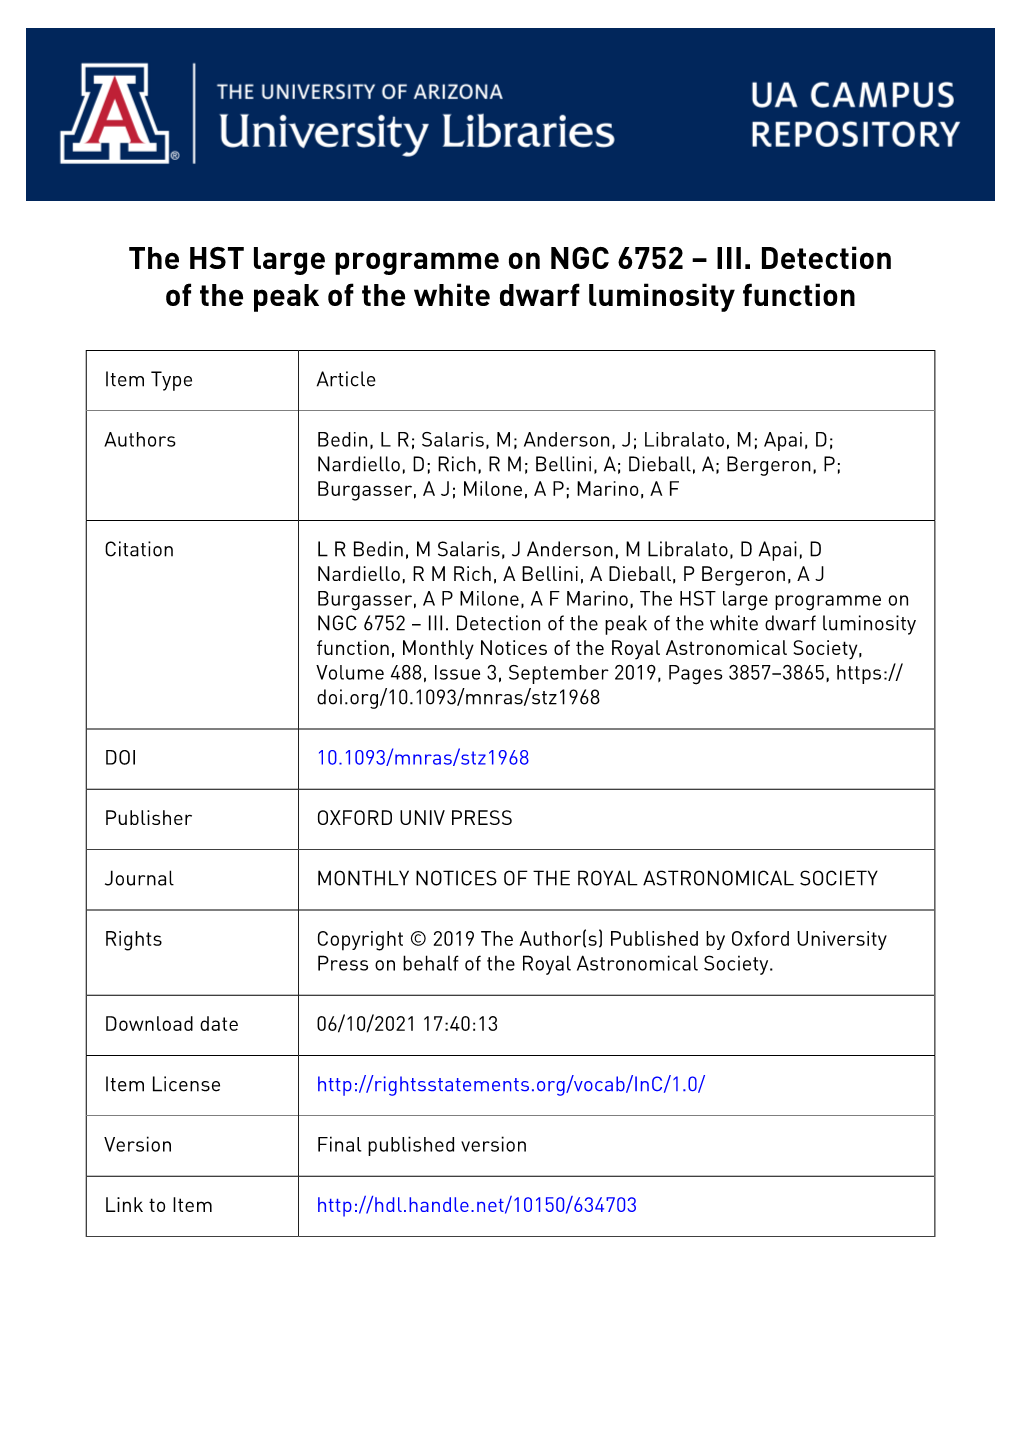 The HST Large Programme on NGC 6752 – III